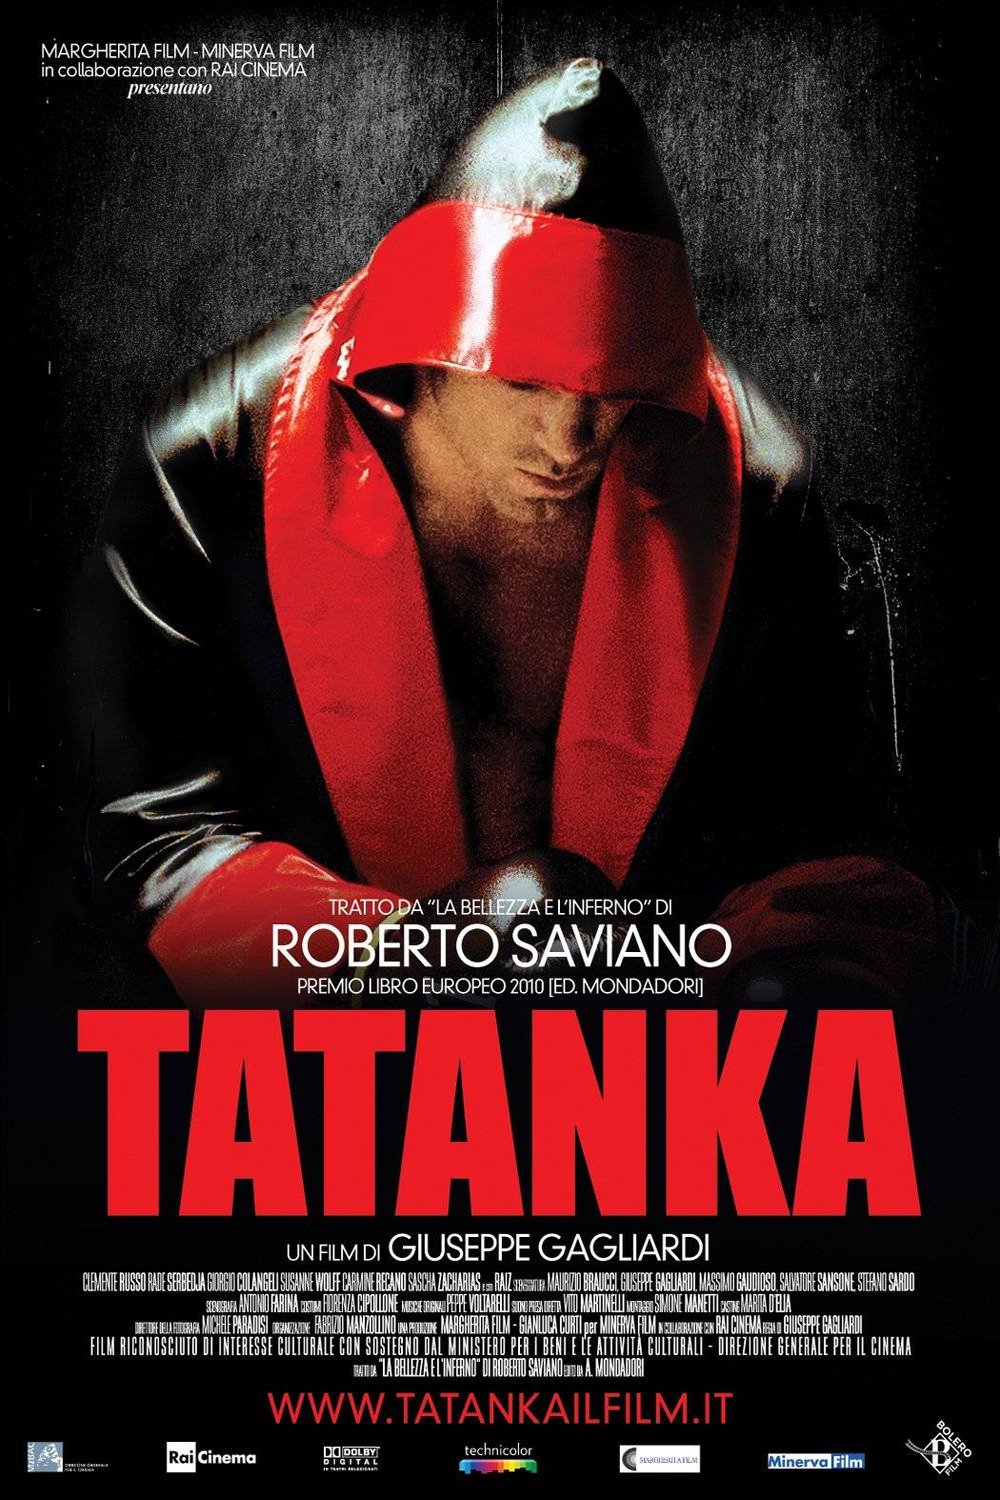 Poster of the movie Tatanka